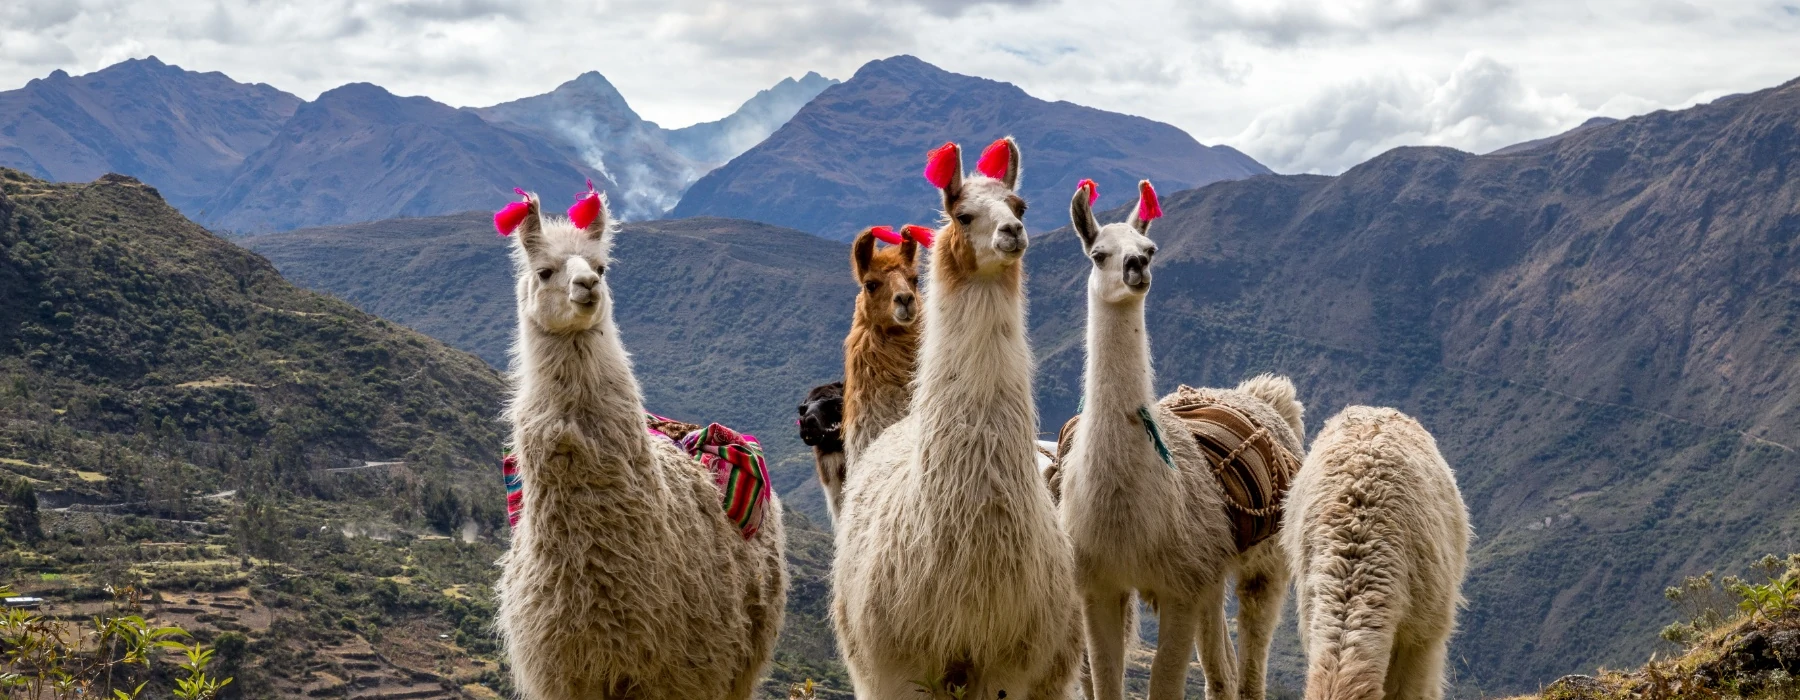 Lares Trek and Machu Picchu Trek